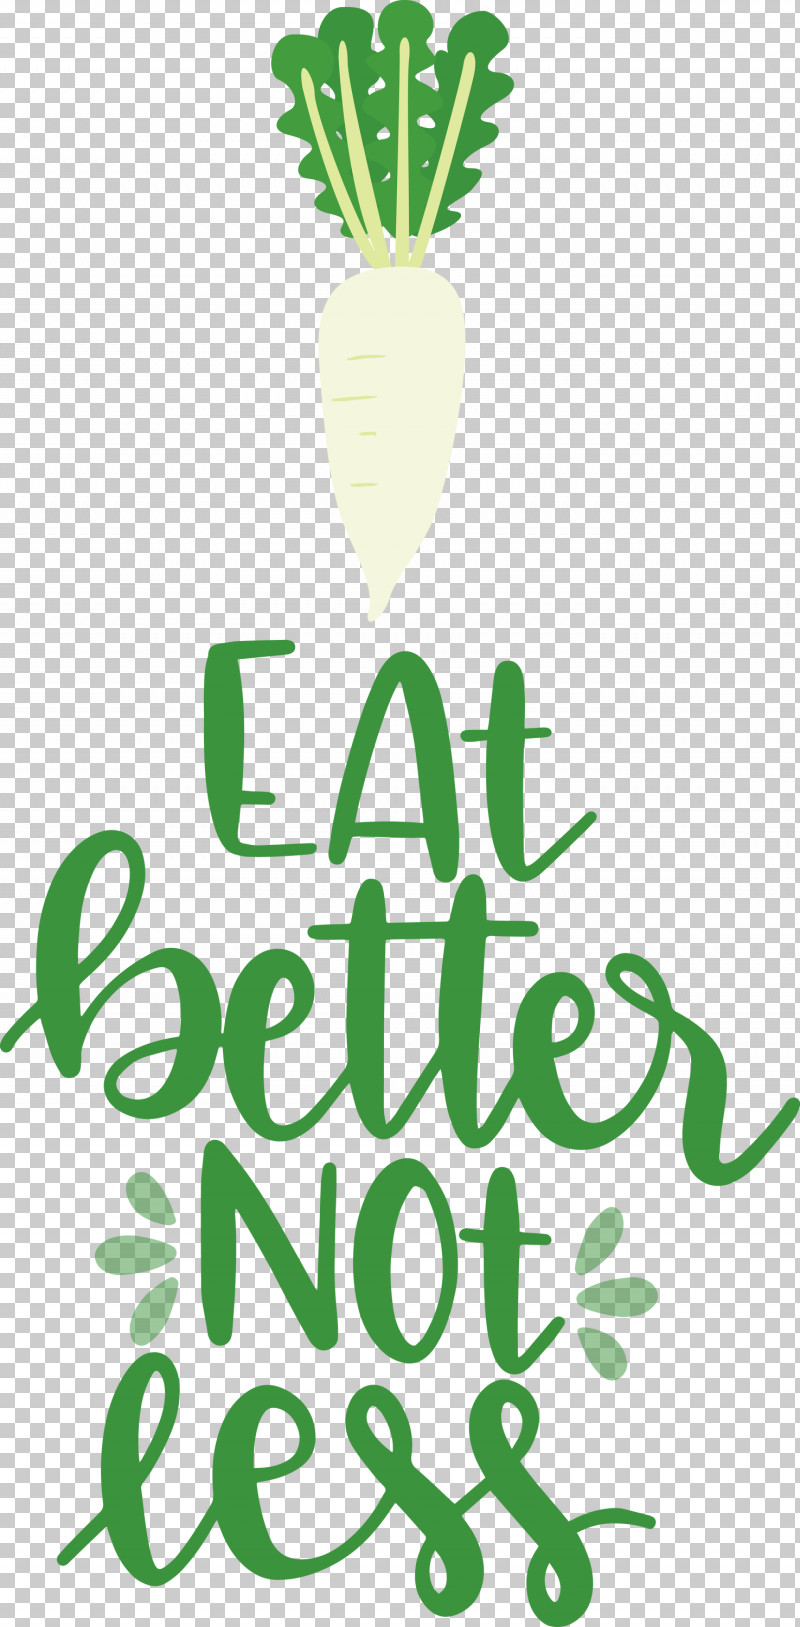 Eat Better Not Less Food Kitchen PNG, Clipart, Flower, Food, Kitchen, Leaf, Line Free PNG Download